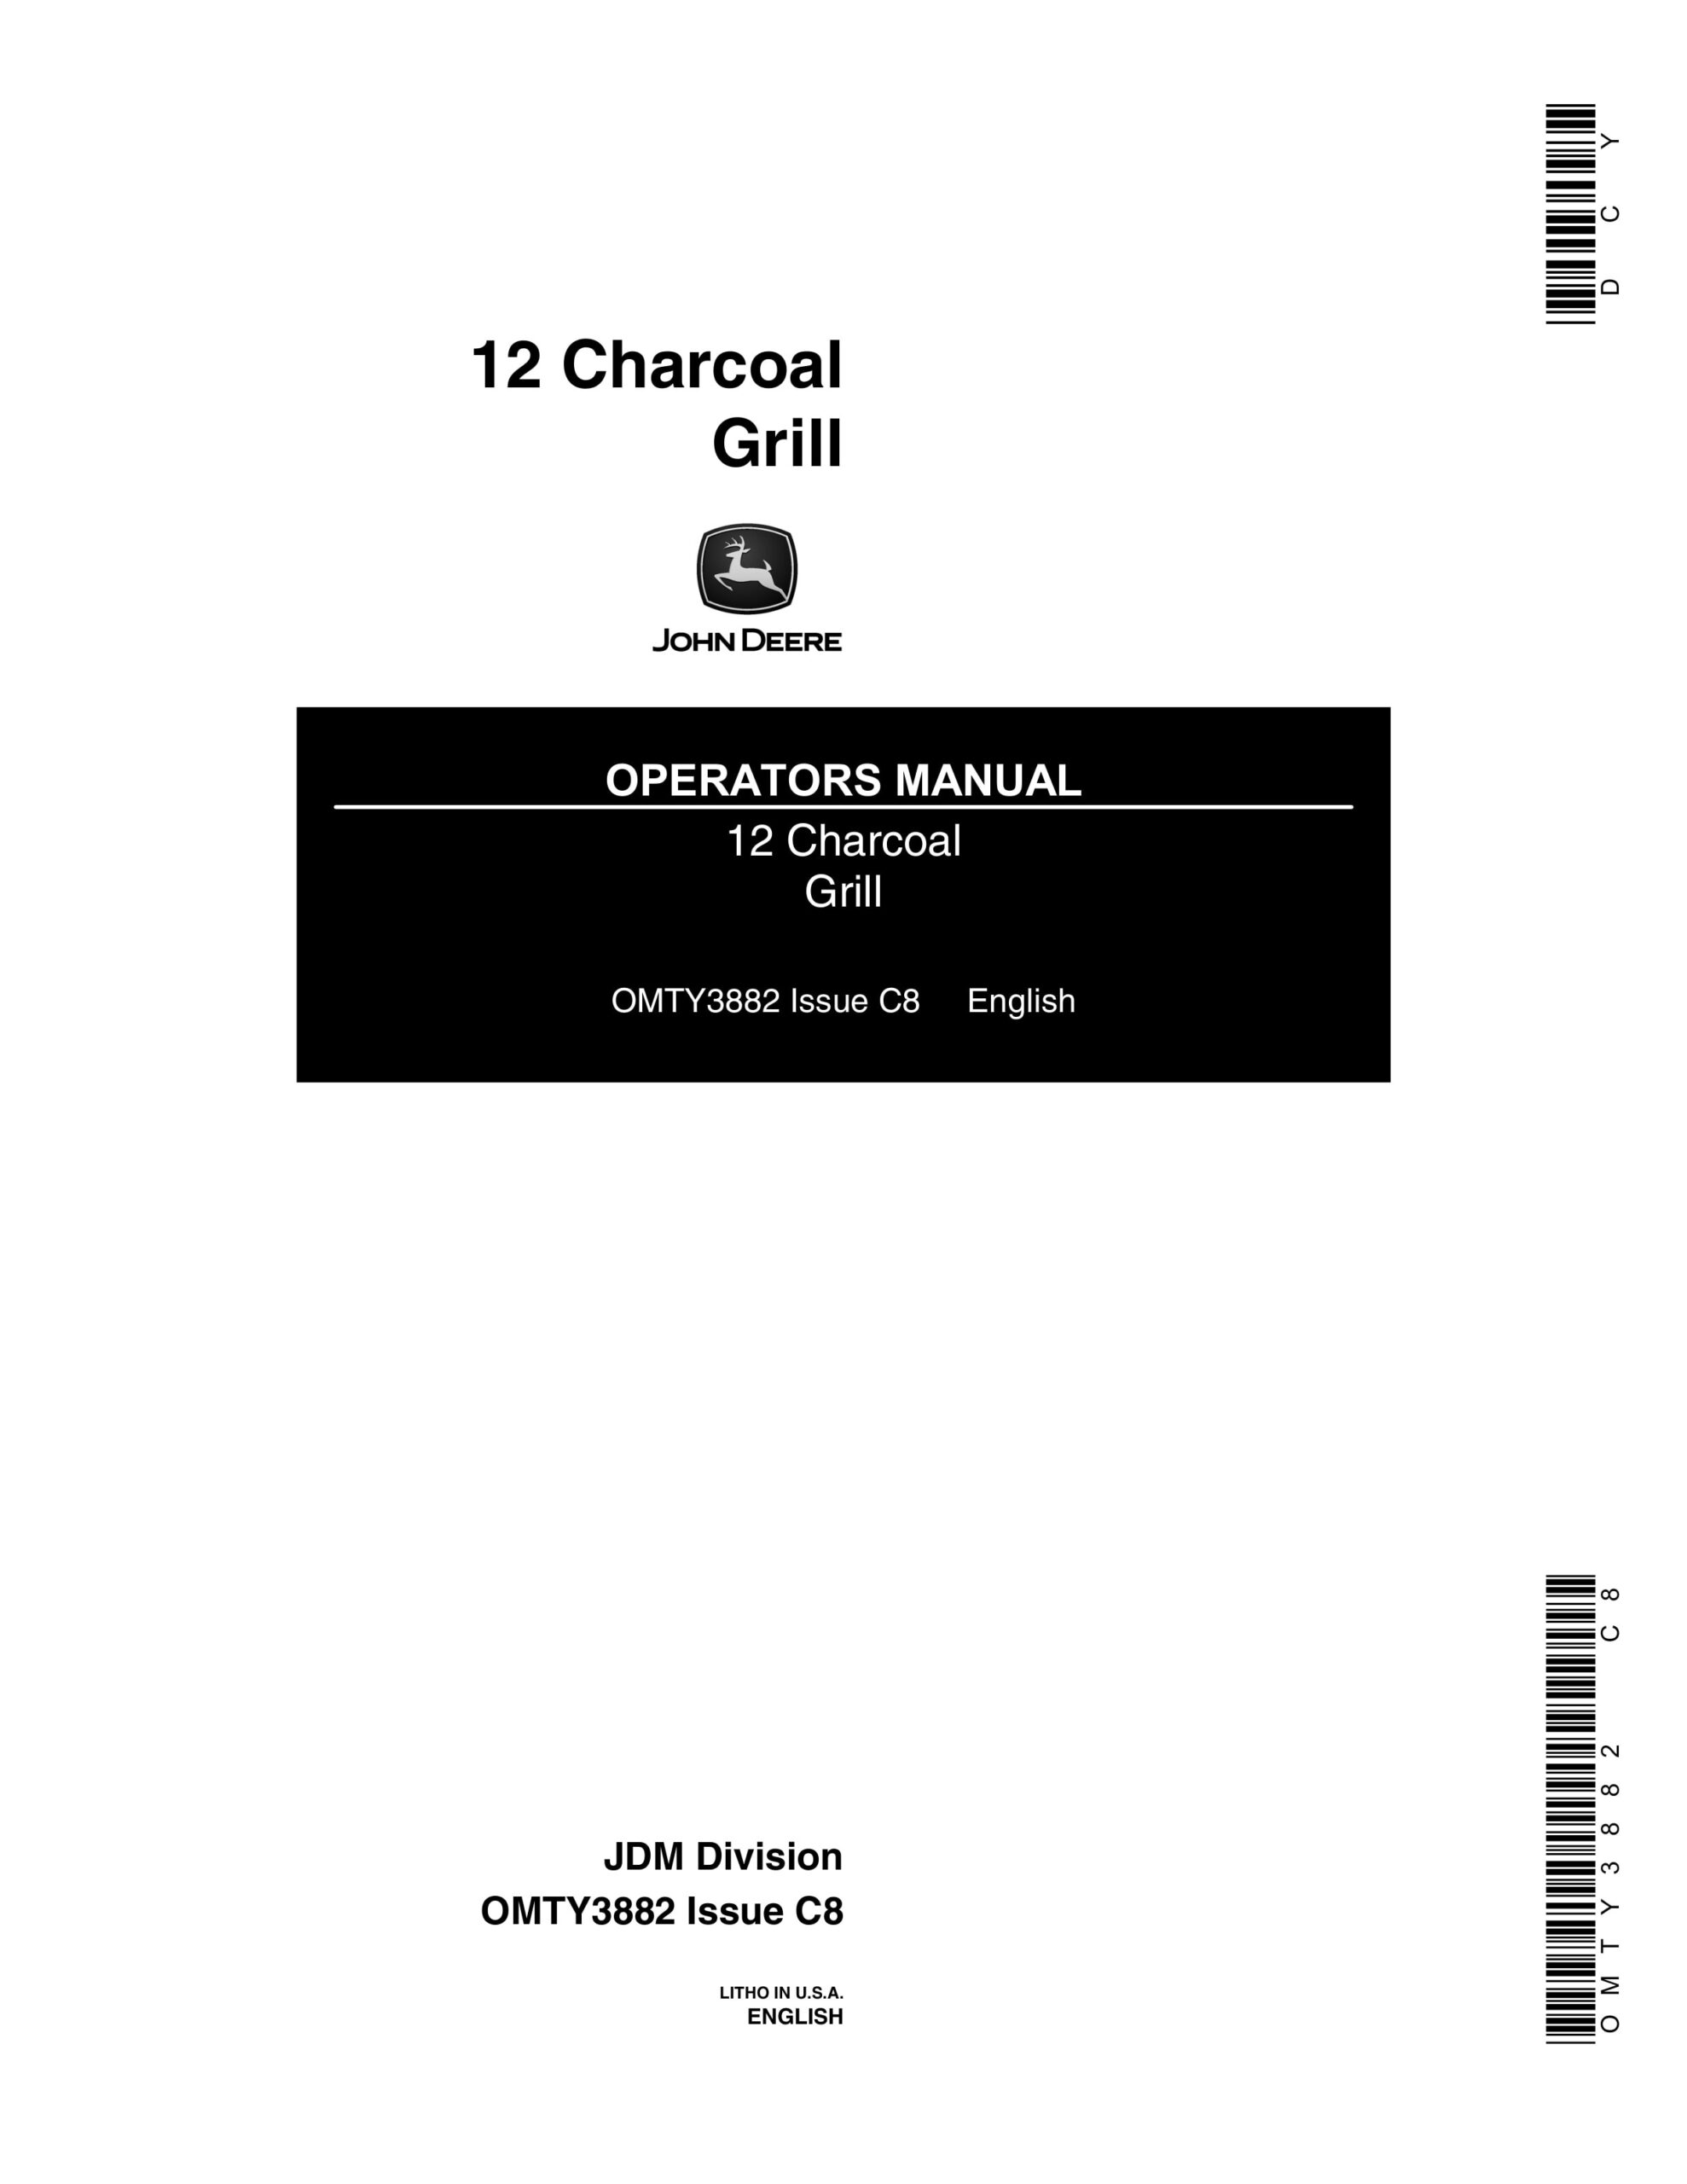 John Deere 12 Charcoal Grill Operator Manual OMTY3882-1